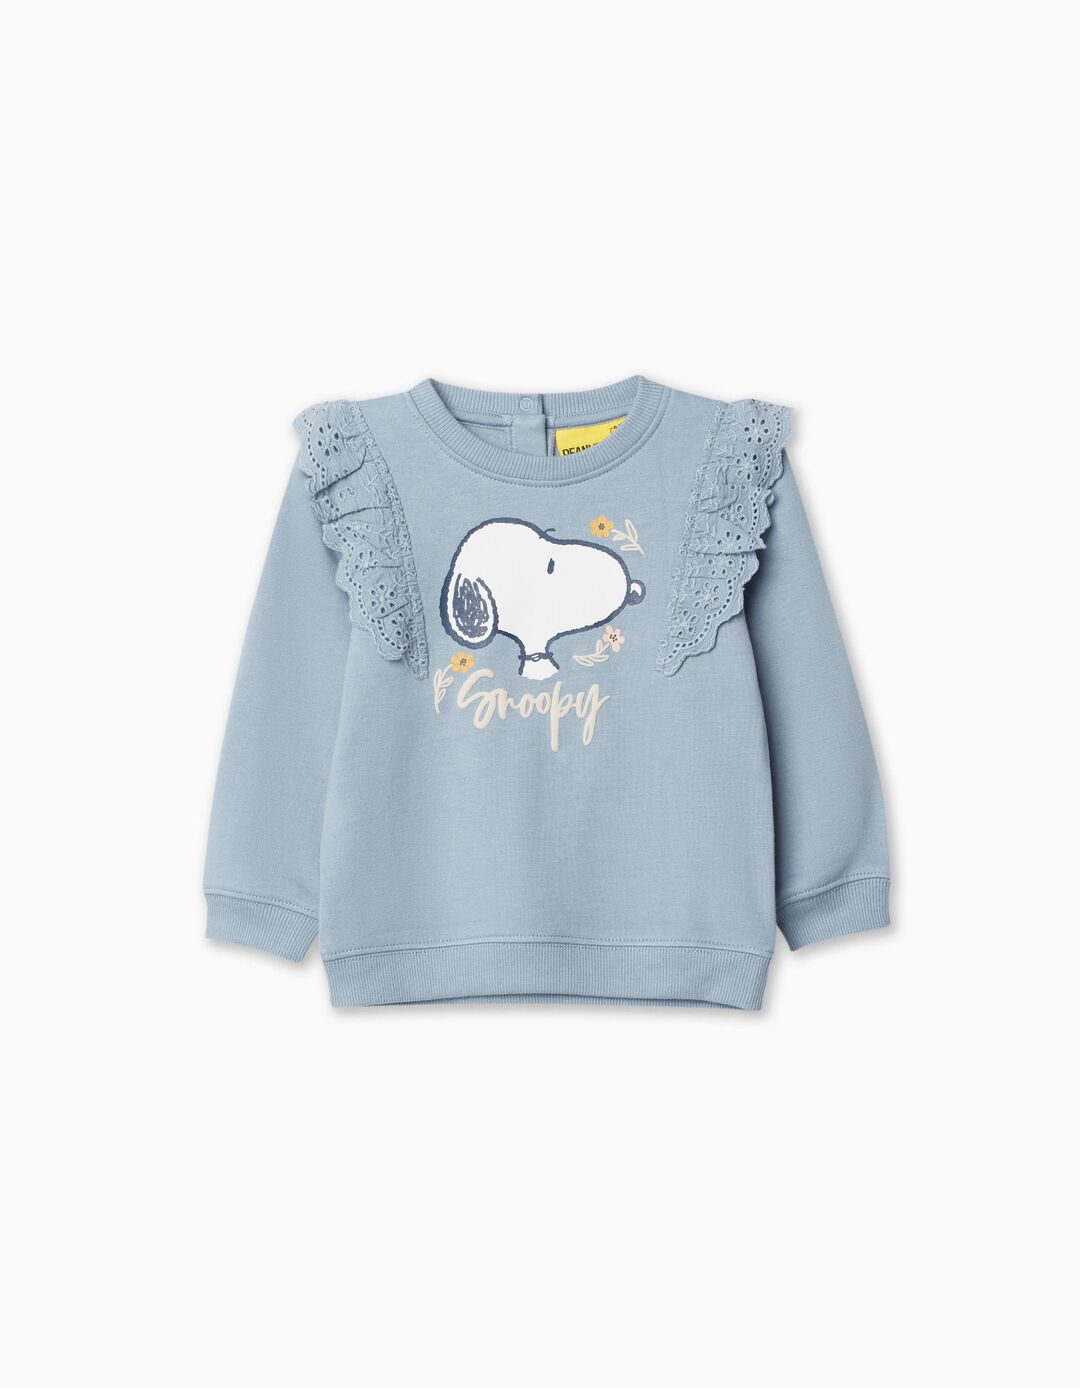 English Embroidered Sweatshirt 'Snoopy', Baby Girl, Light Blue